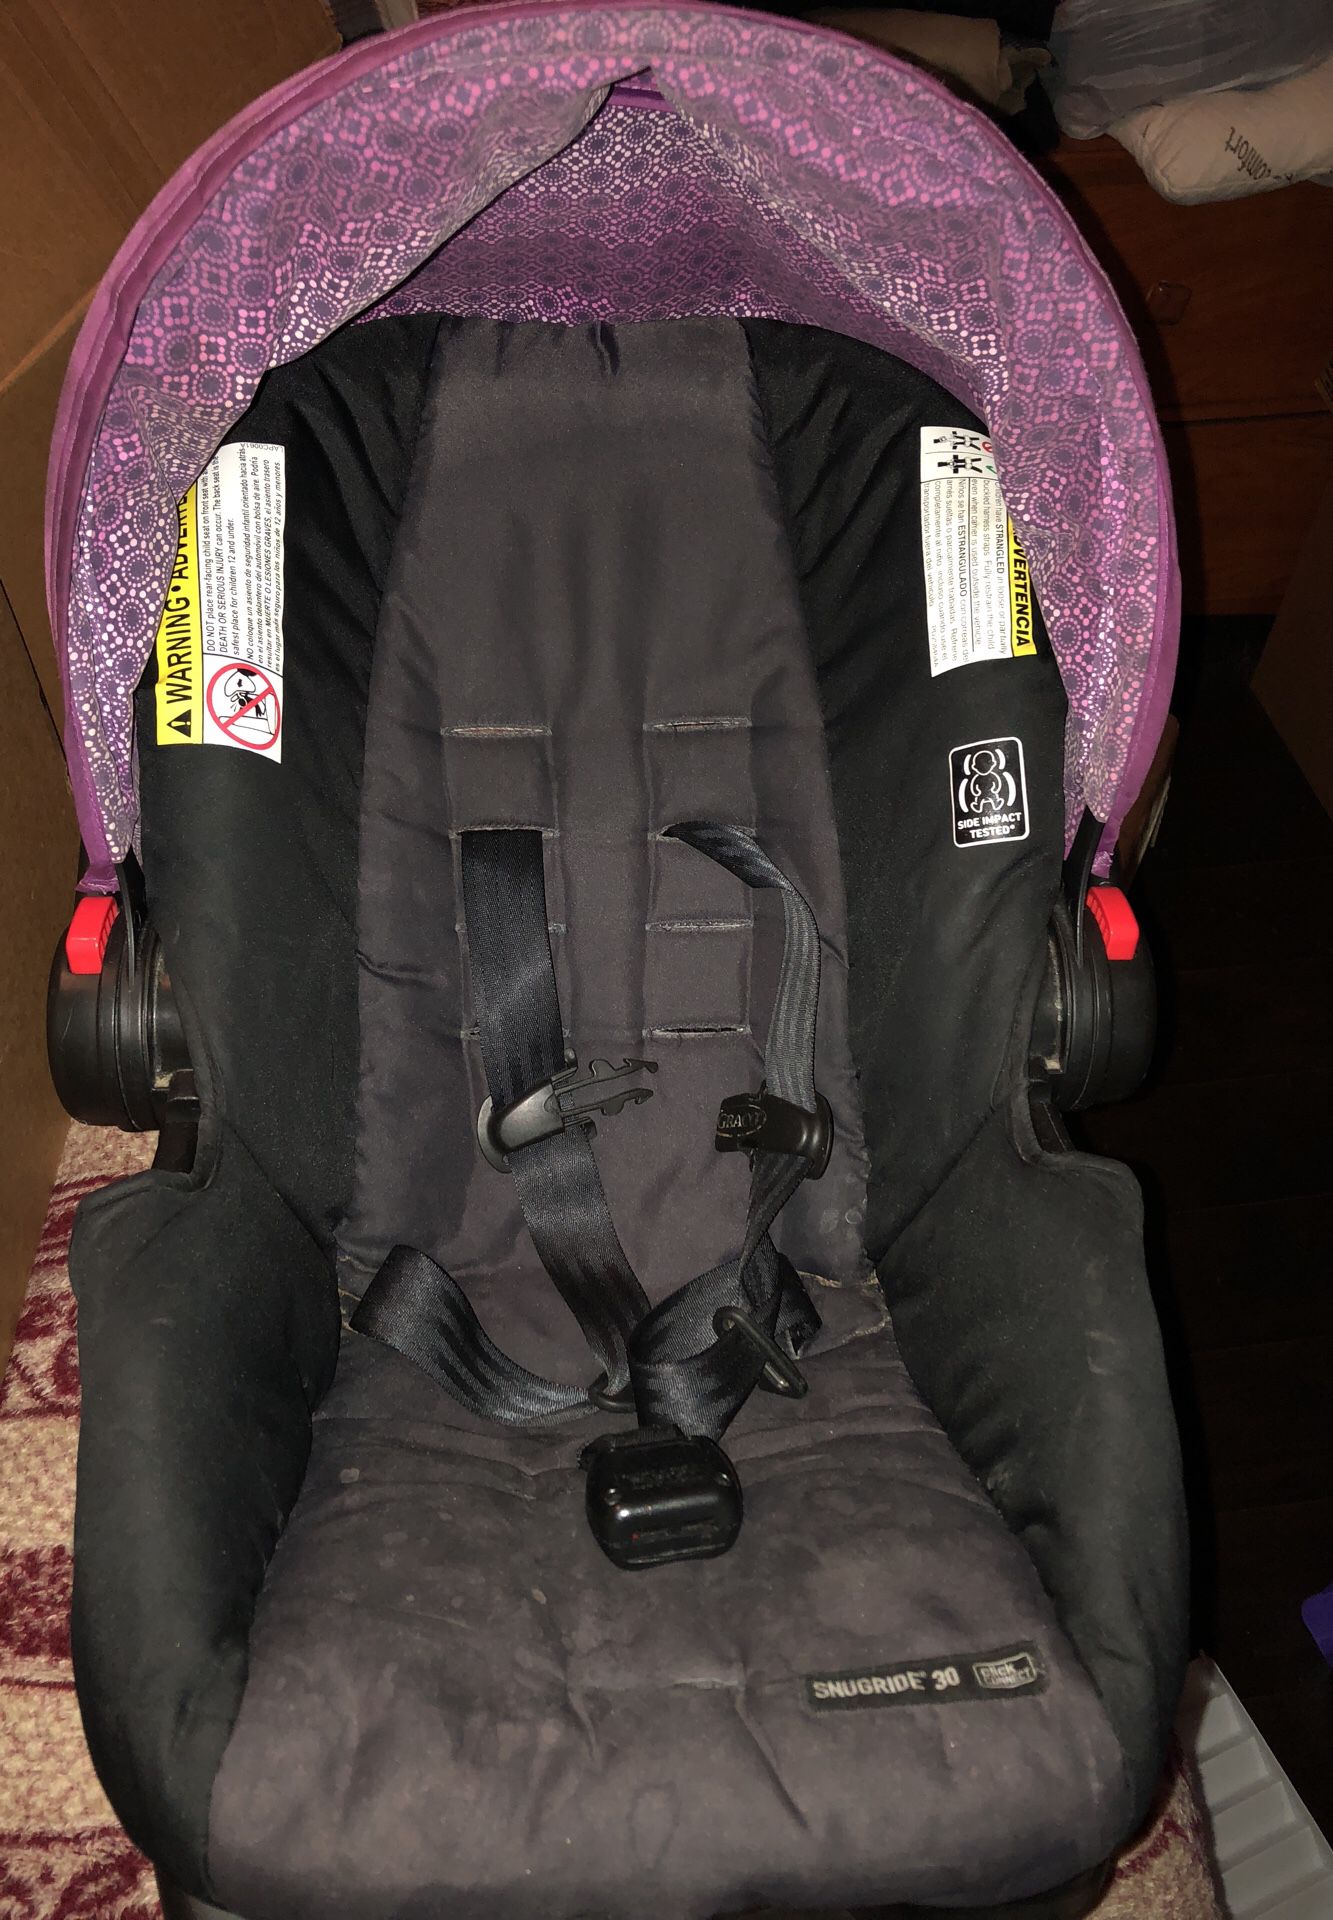 Baby Graco car seat